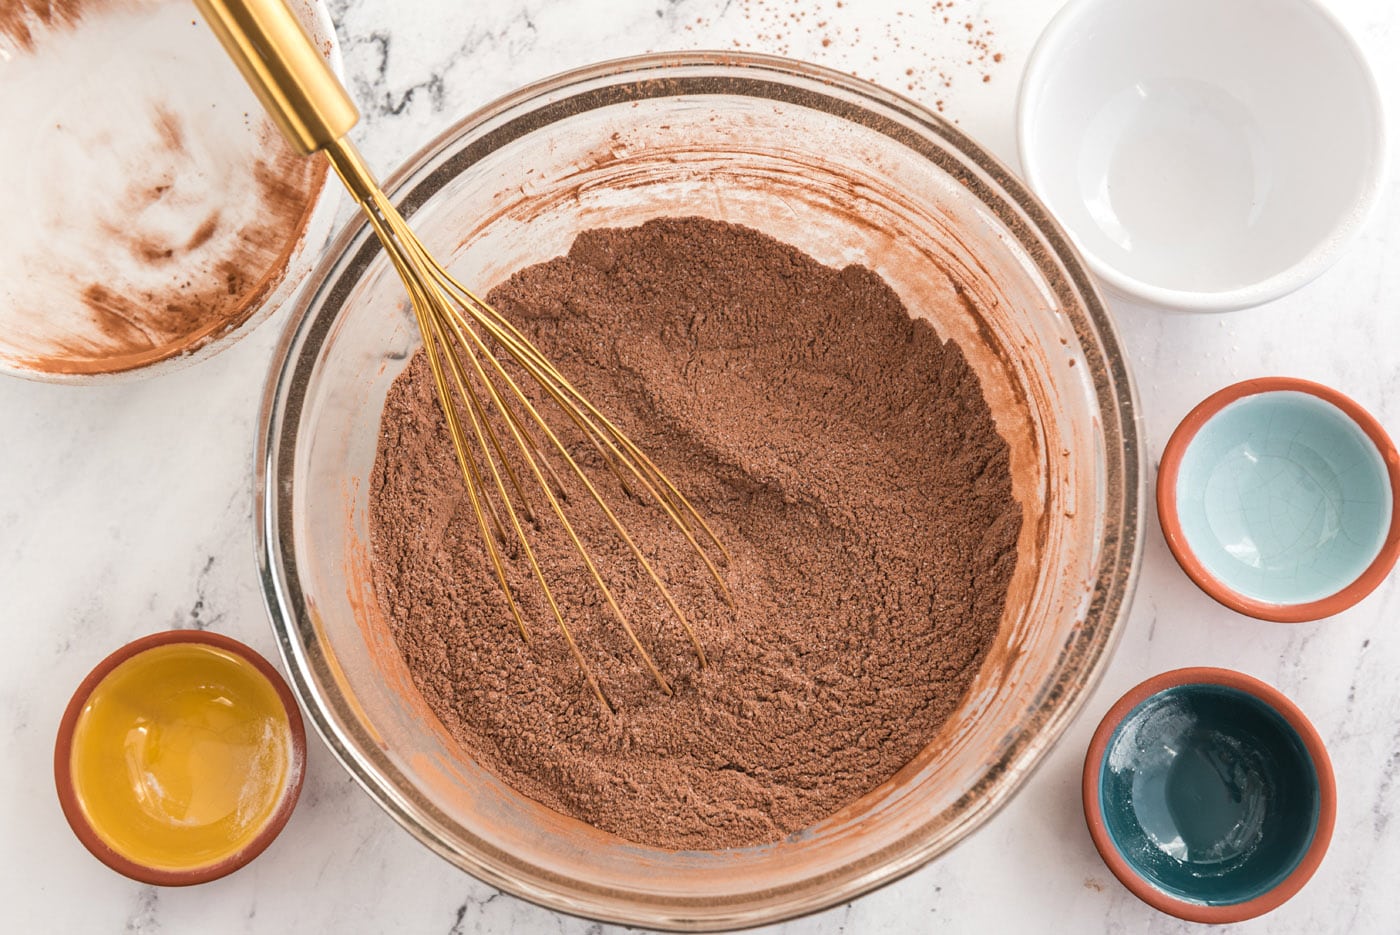 whisking sugar, flour, cocoa powder, baking soda, baking powder, and salt in a bowl.